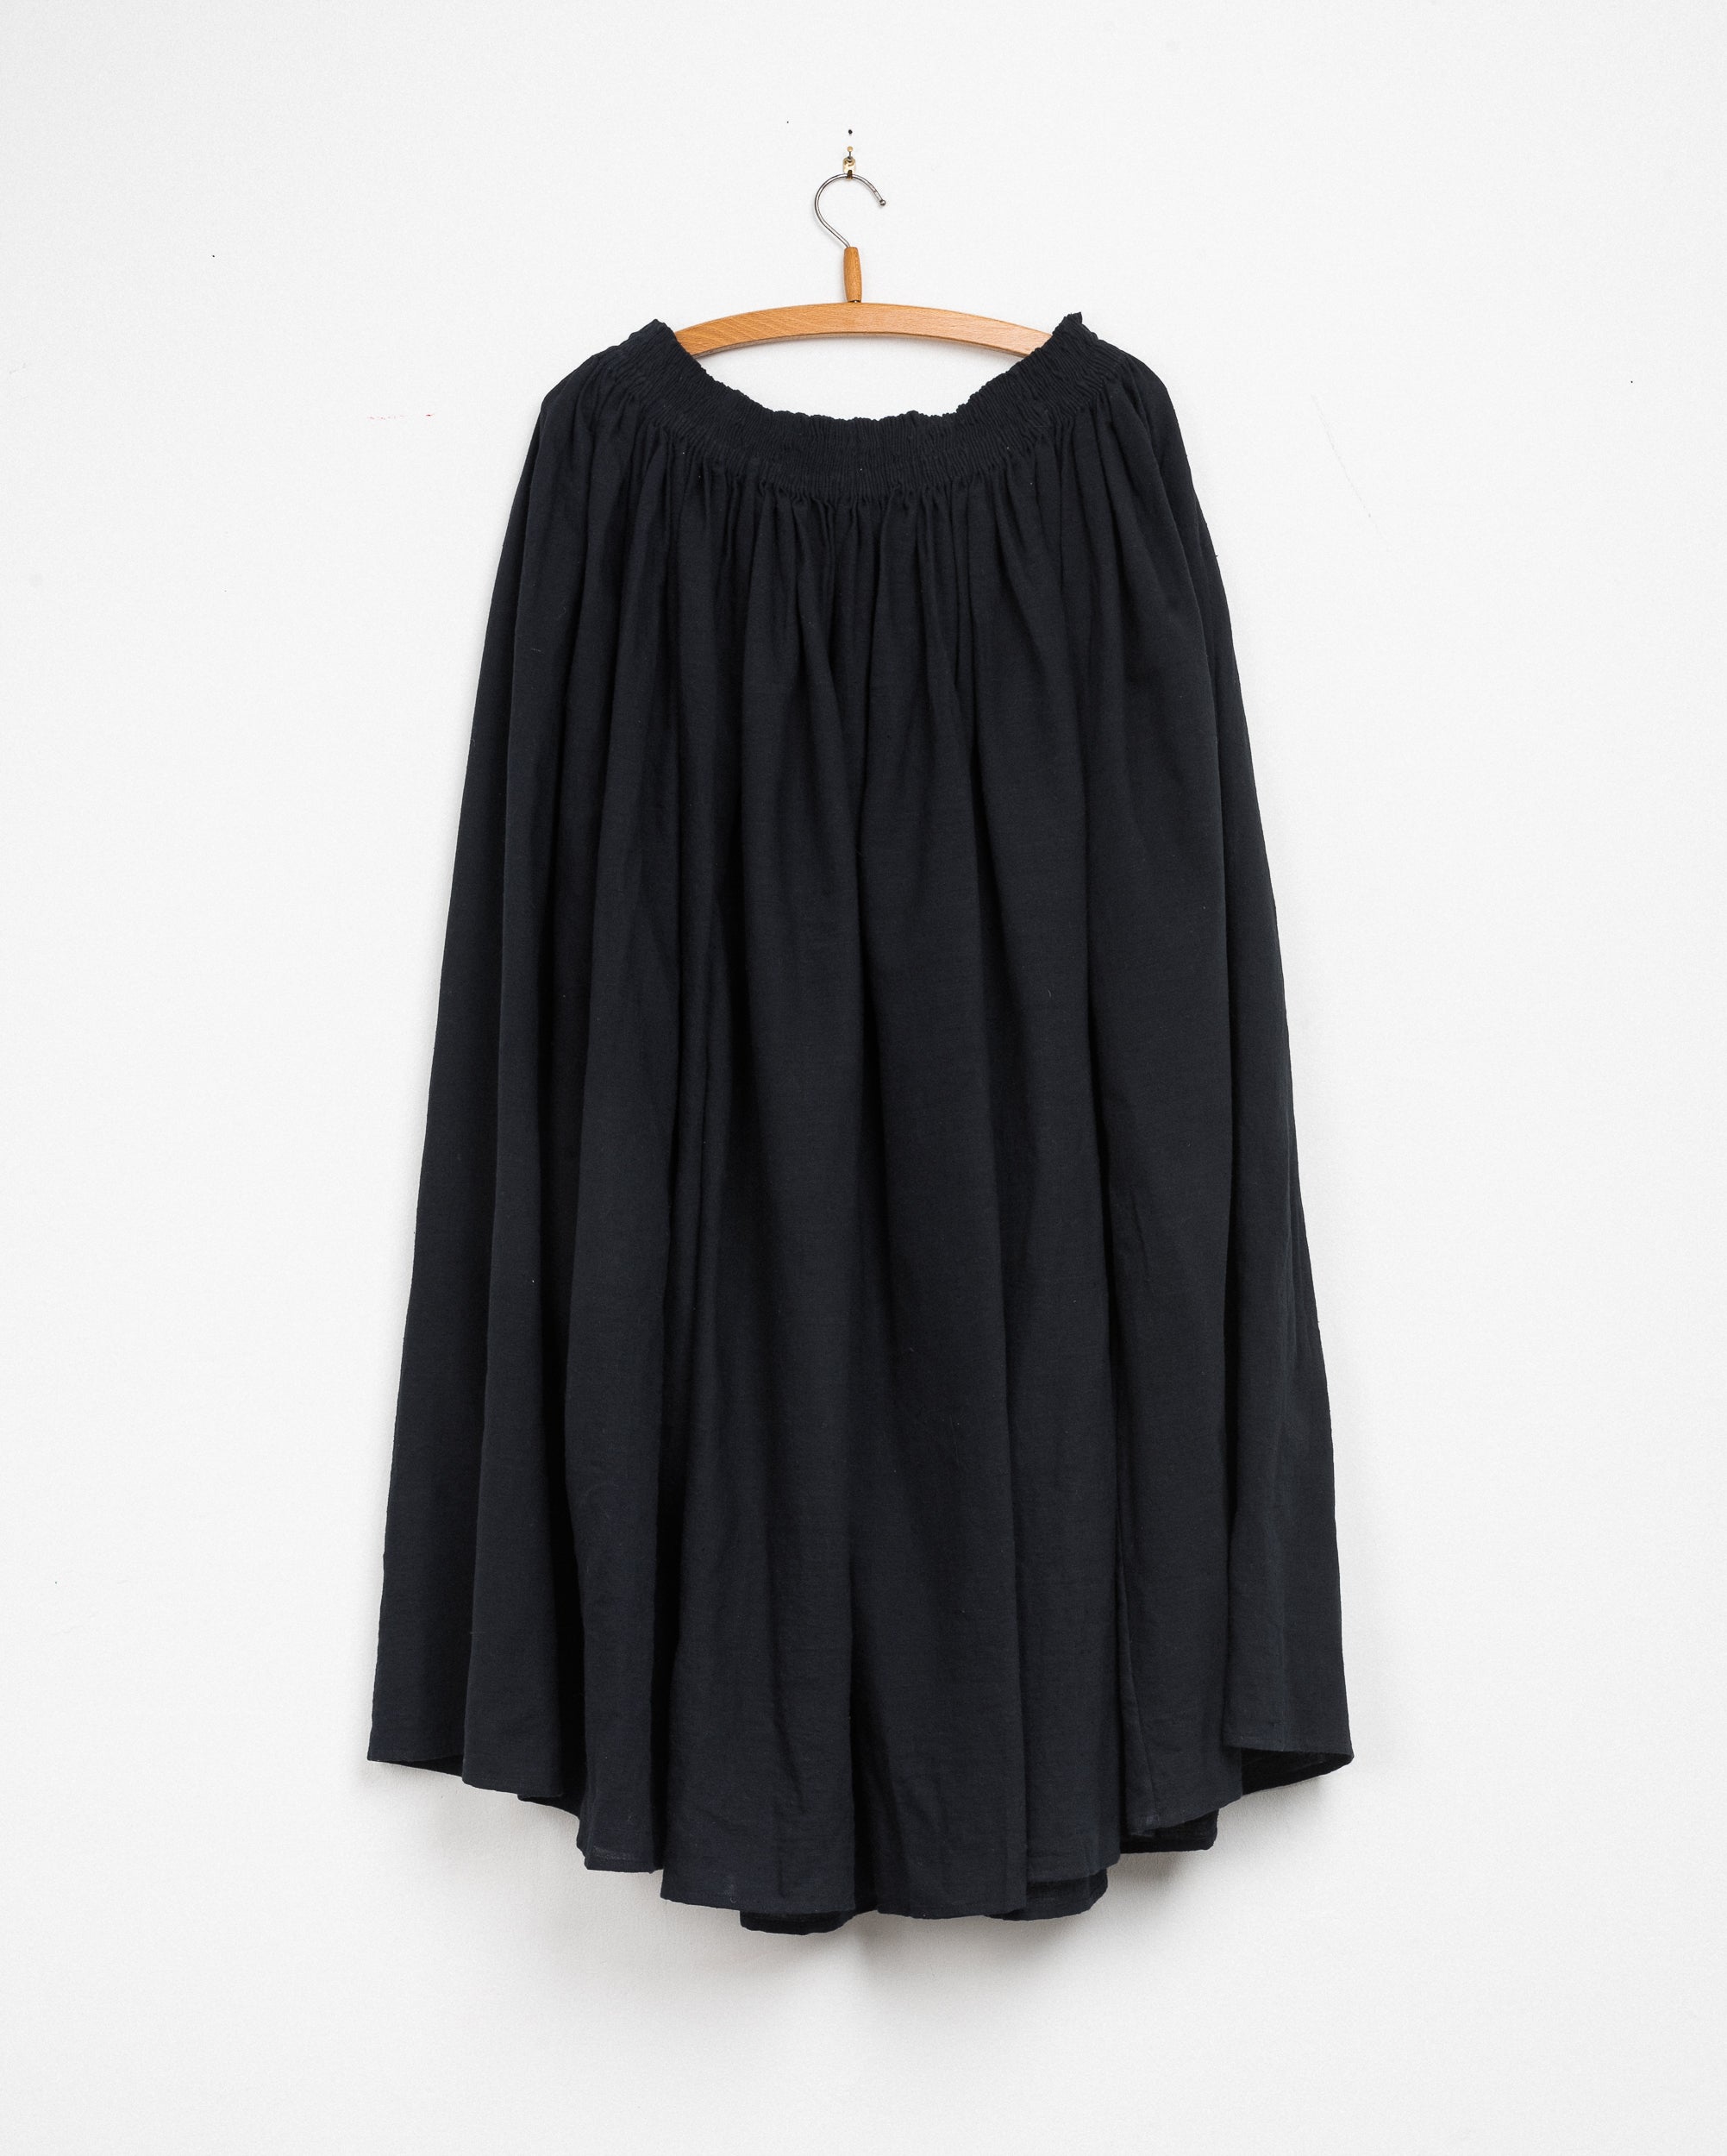 Ruhi Shirred Skirt in Black